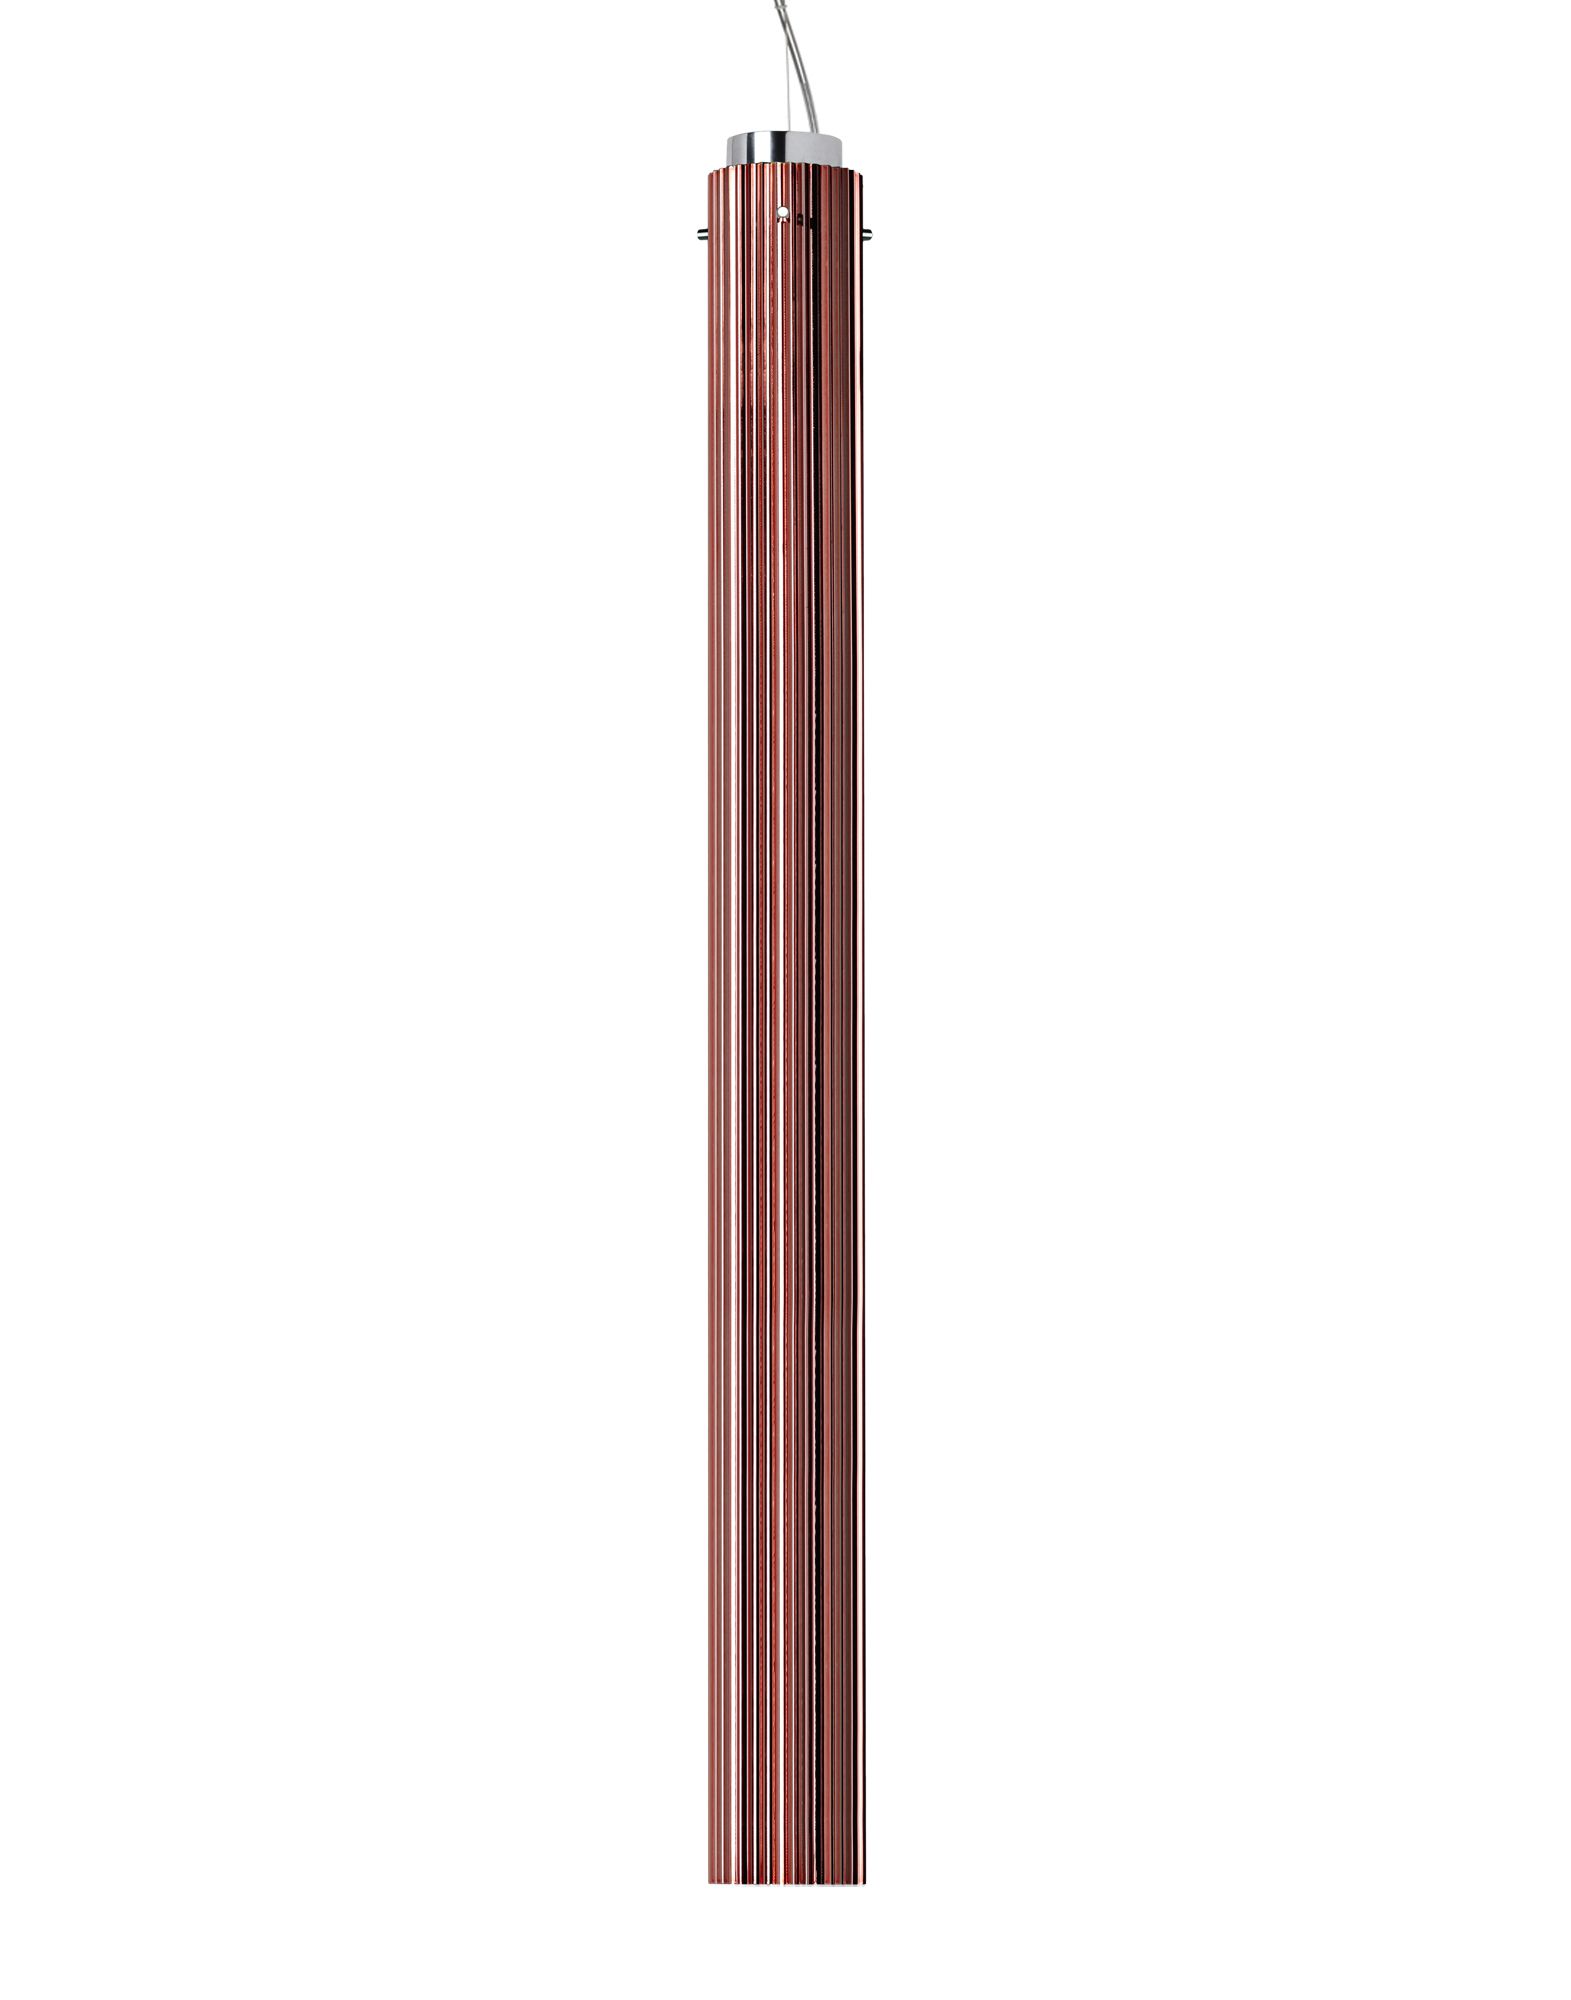 Suspensie Kartell by Laufen Rifly design Ludovica & Roberto Palomba LED 10W h90cm cupru metalizat Kartell by Laufen pret redus imagine 2022